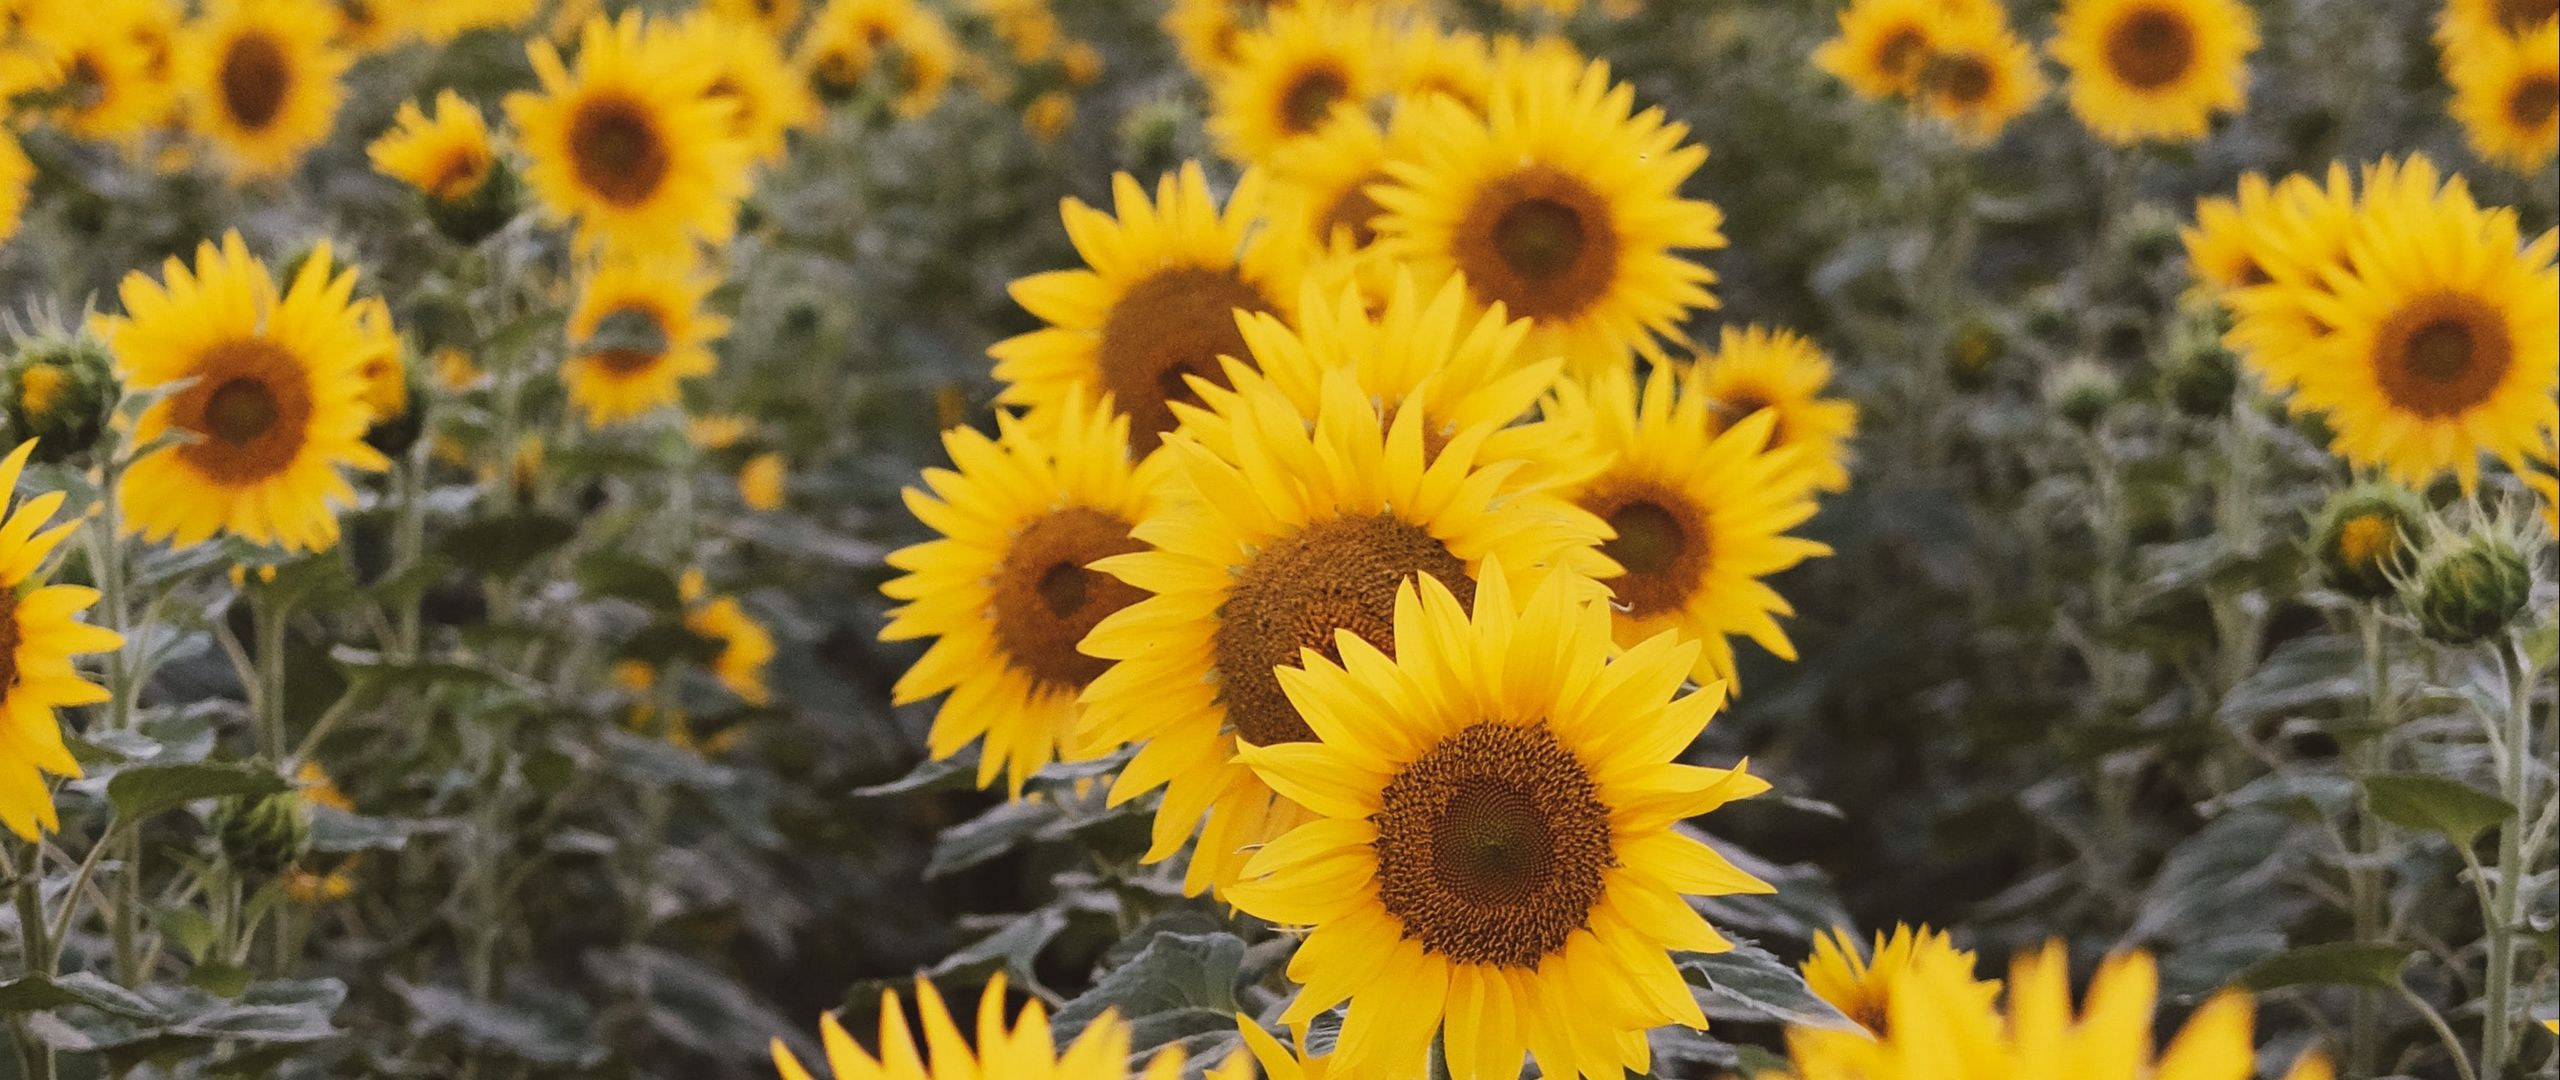 Download Wallpaper 2560x1080 Sunflowers Flowers Field Yellow Dual